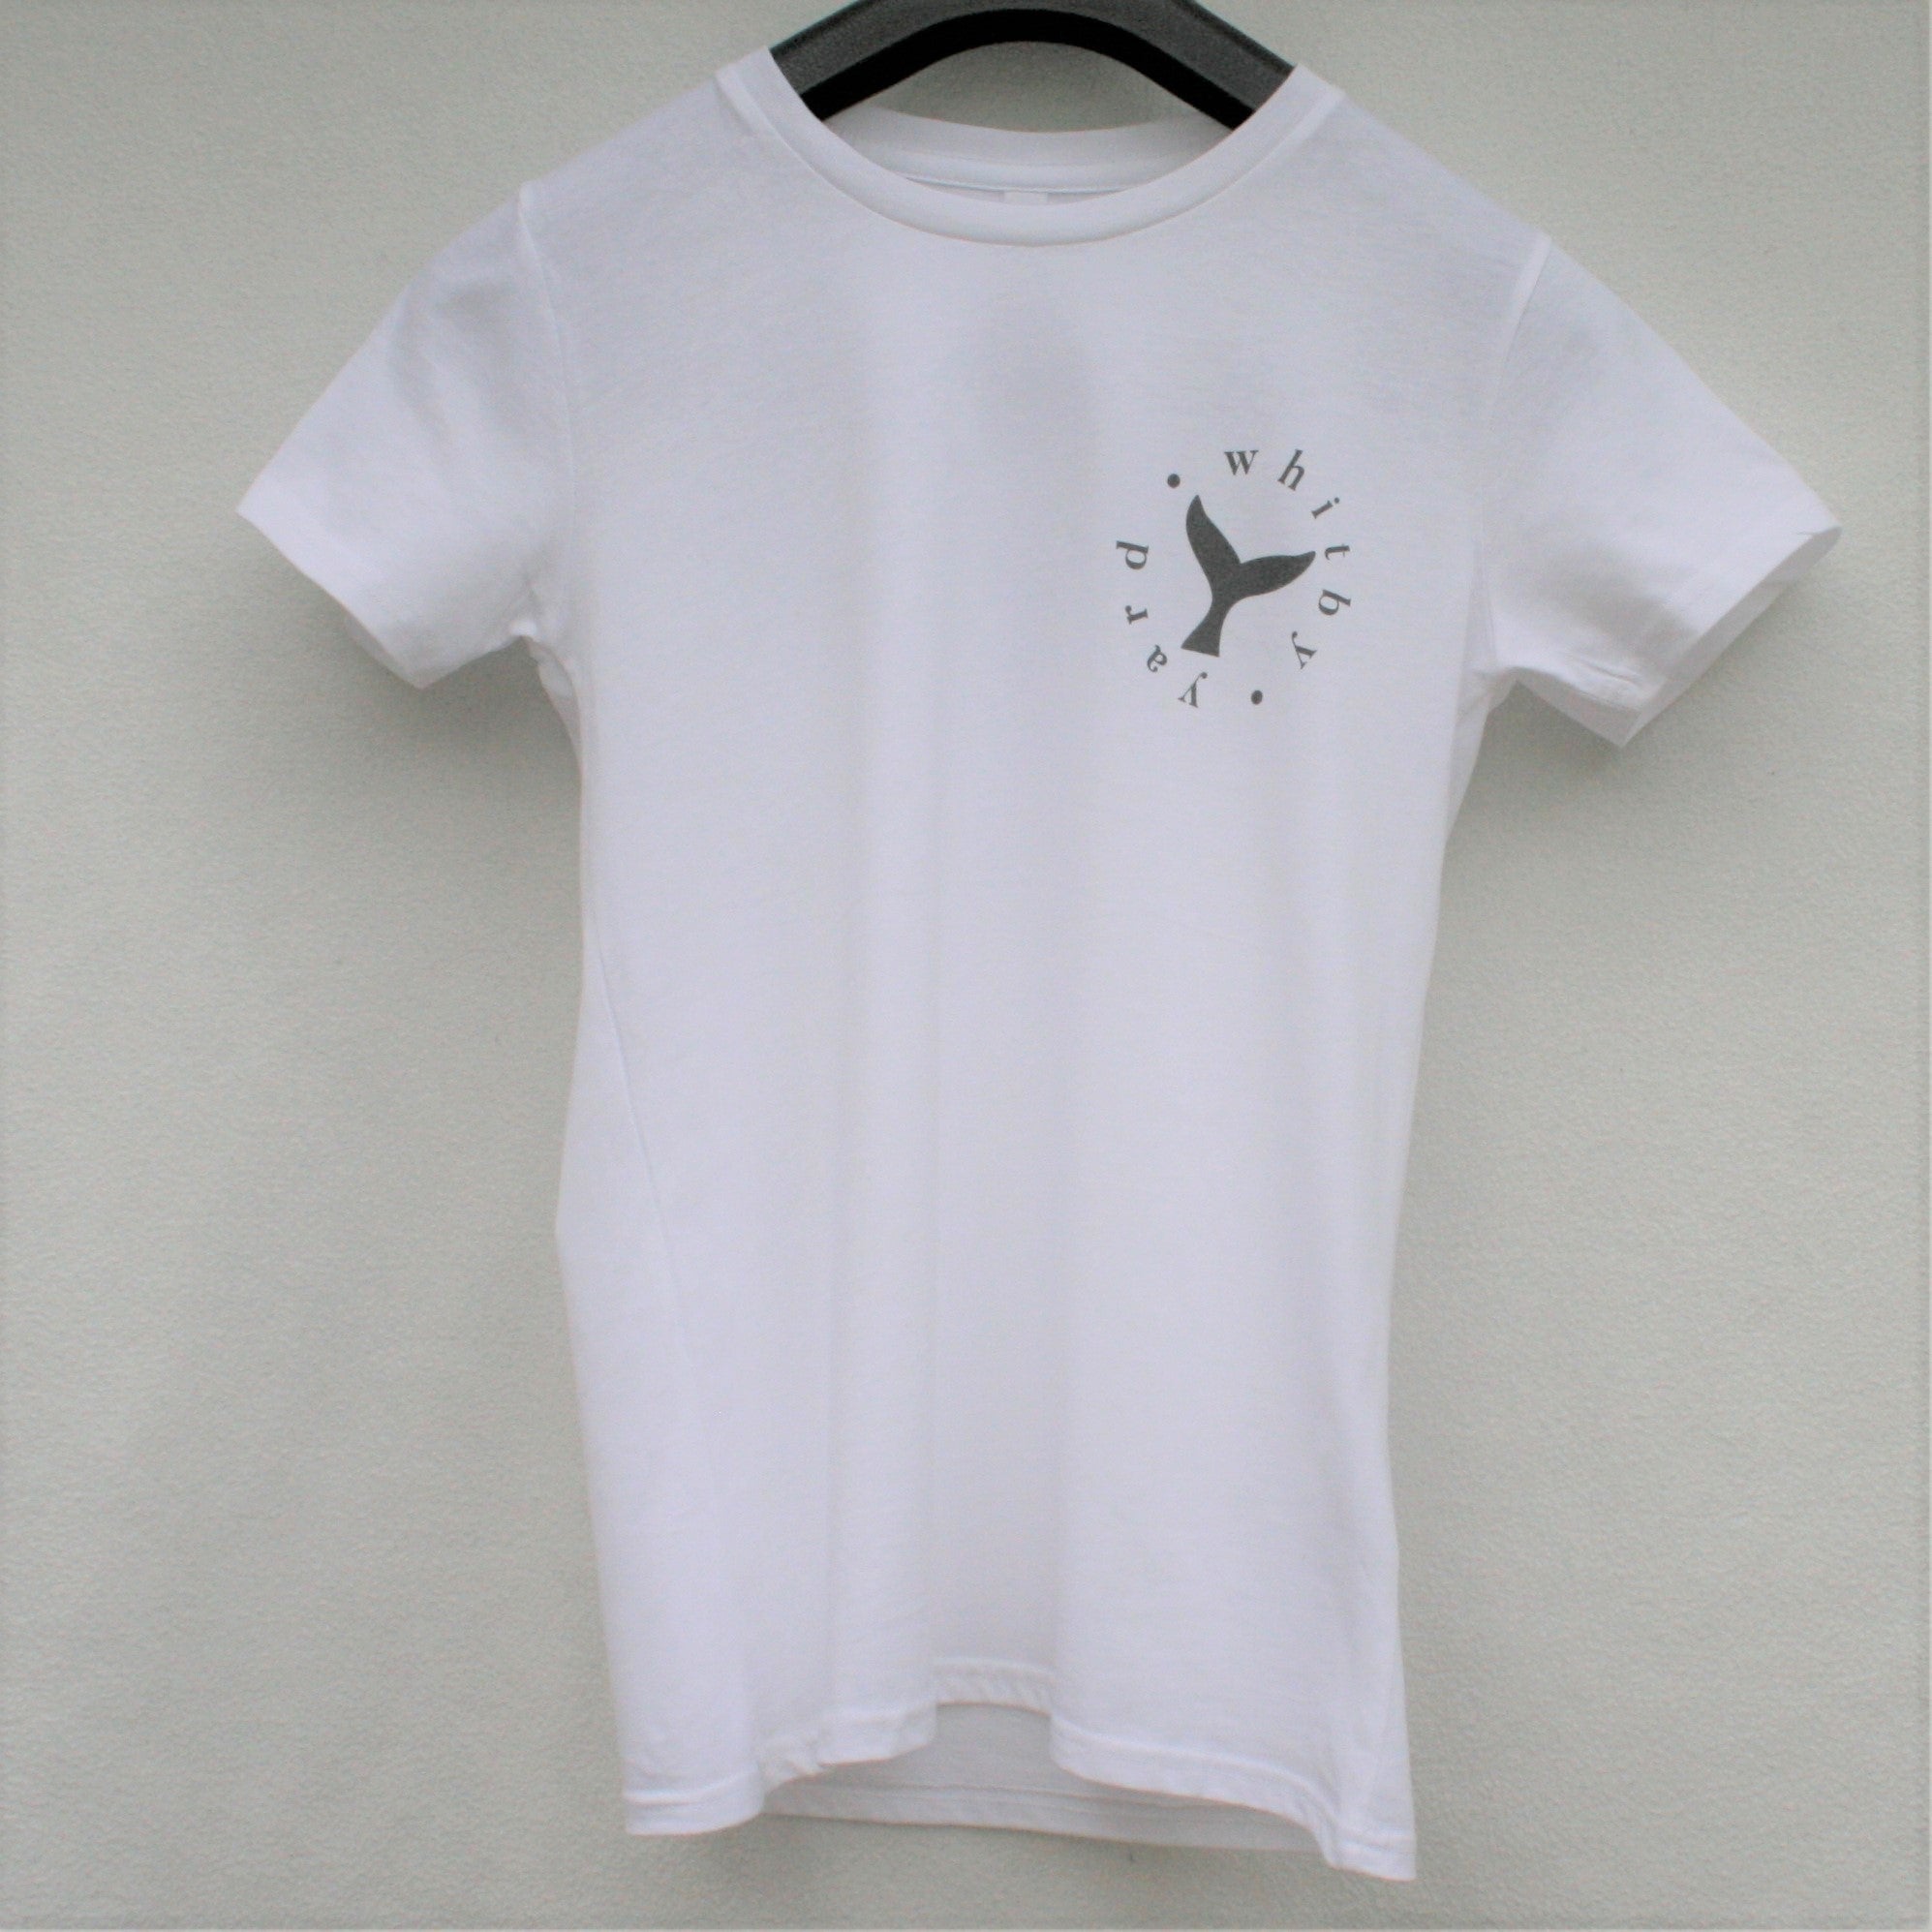 Unisex Lifebuoy T shirt in White